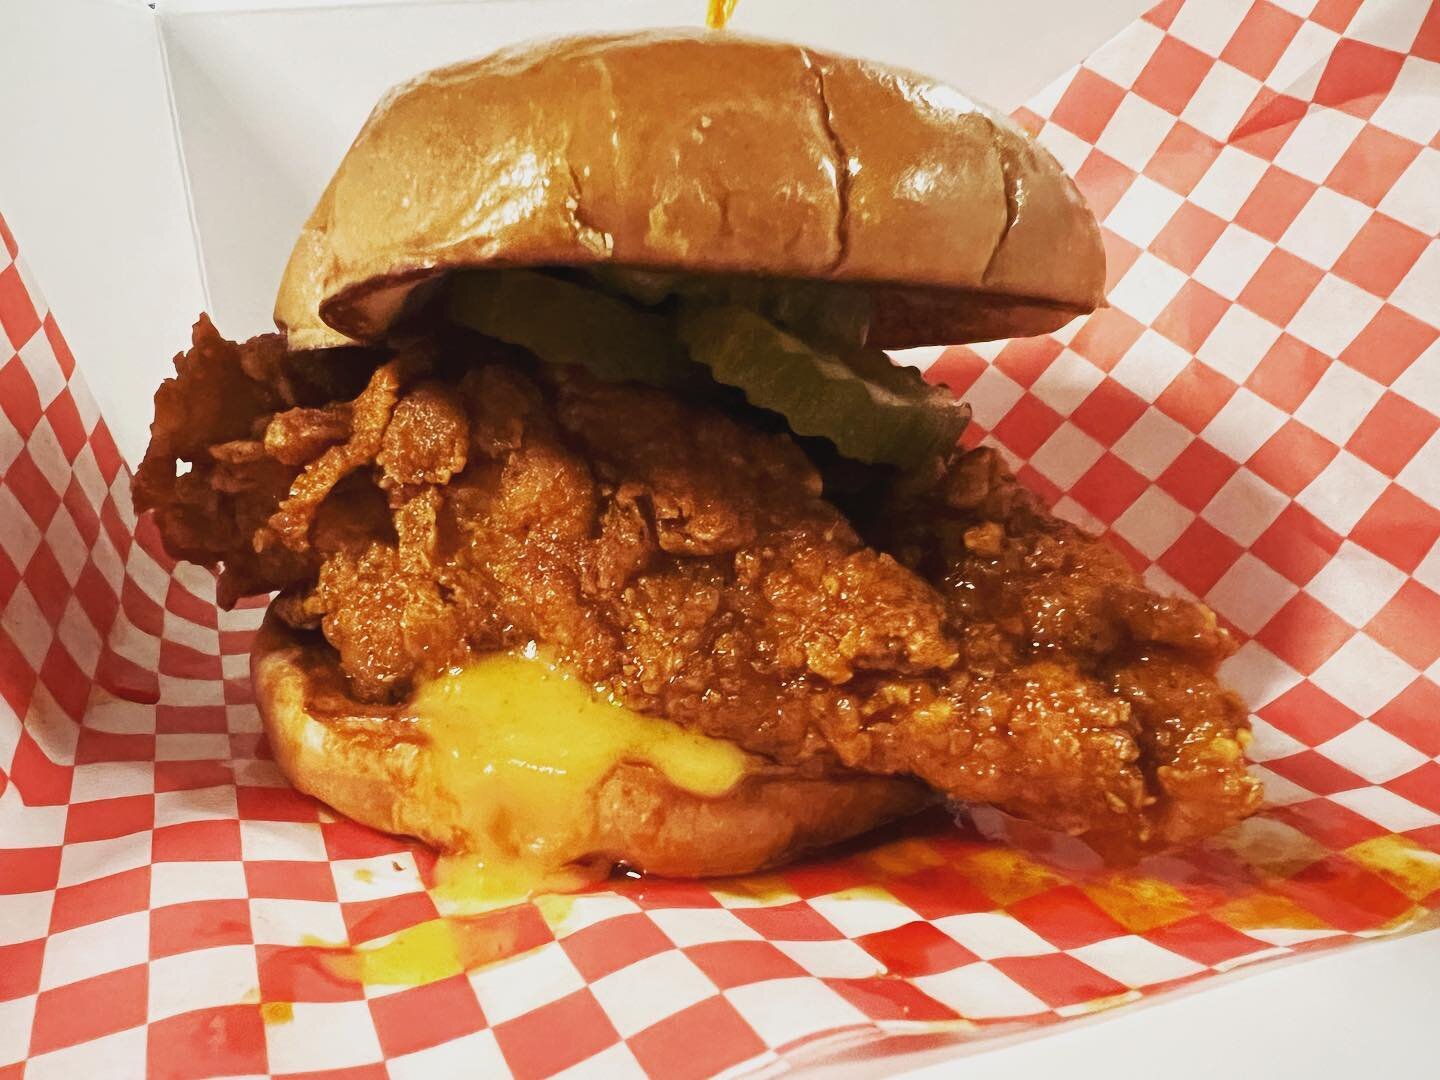 Perfect hangover food. Nashville hot fried chicken sandwich. #nashvillehotchicken #friedchicken #friedchickensandwich @hattiebs @cosmopolitan_lv